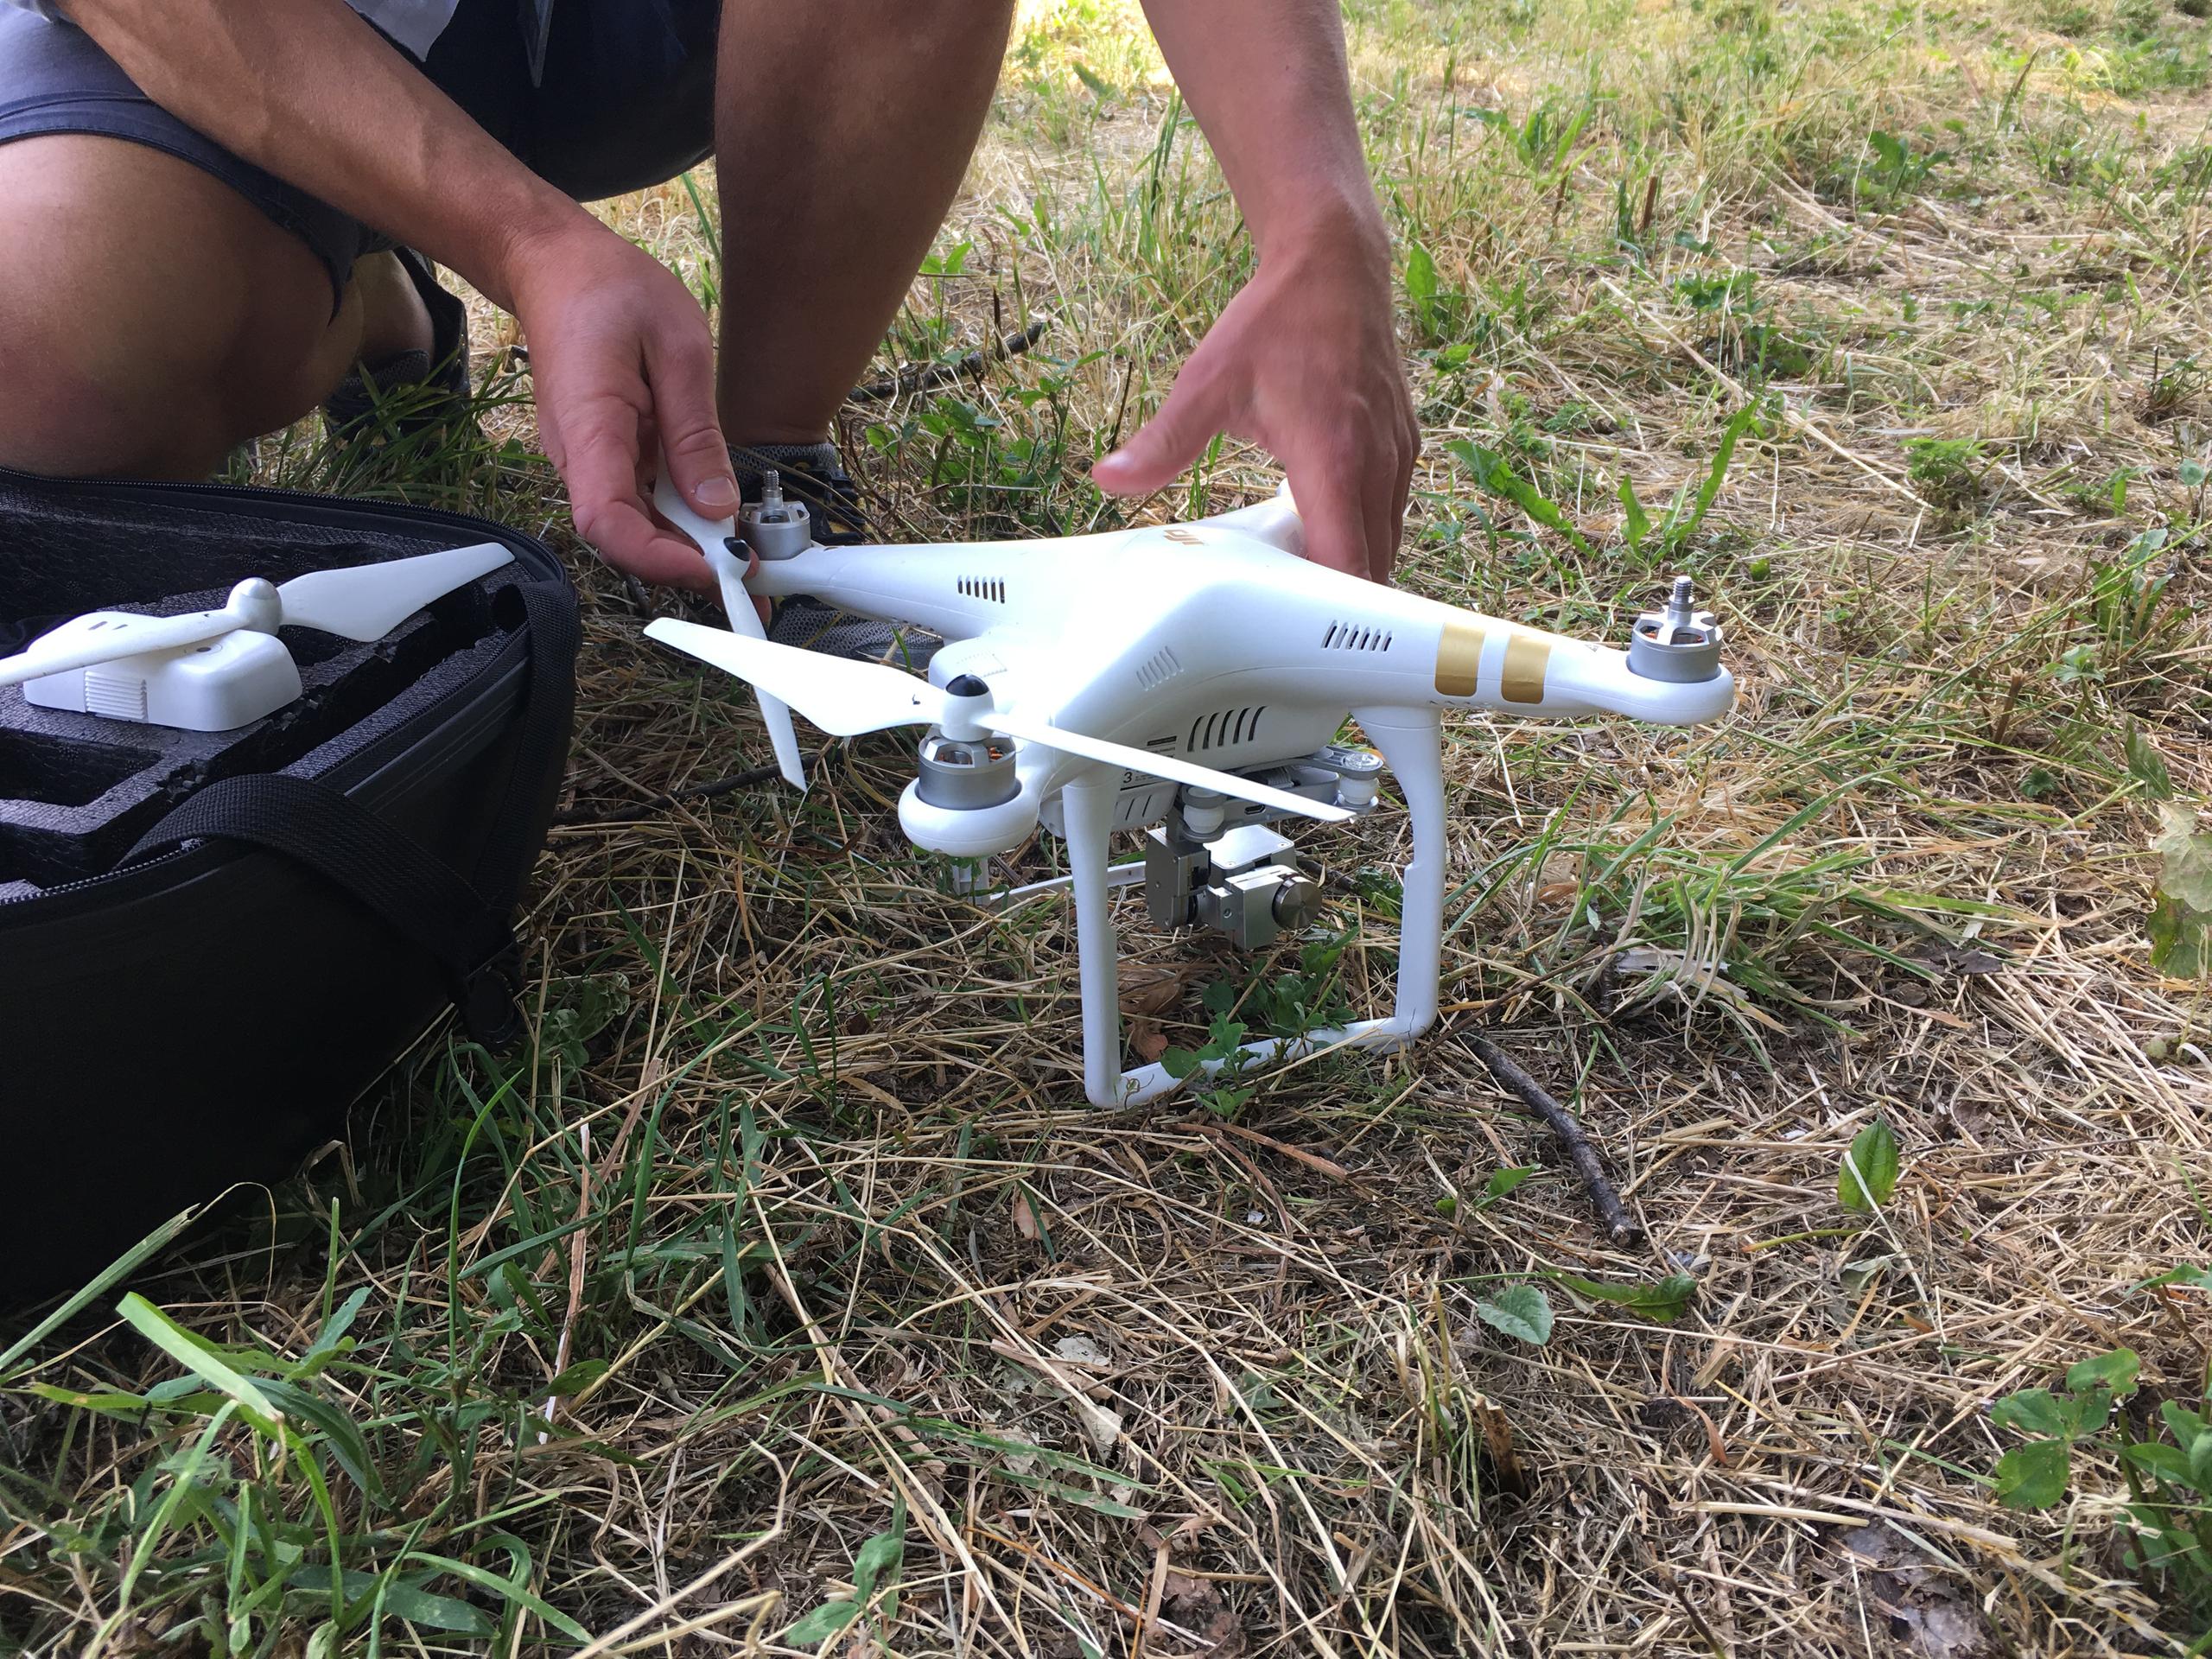 A man assembles a multi-rotor drone